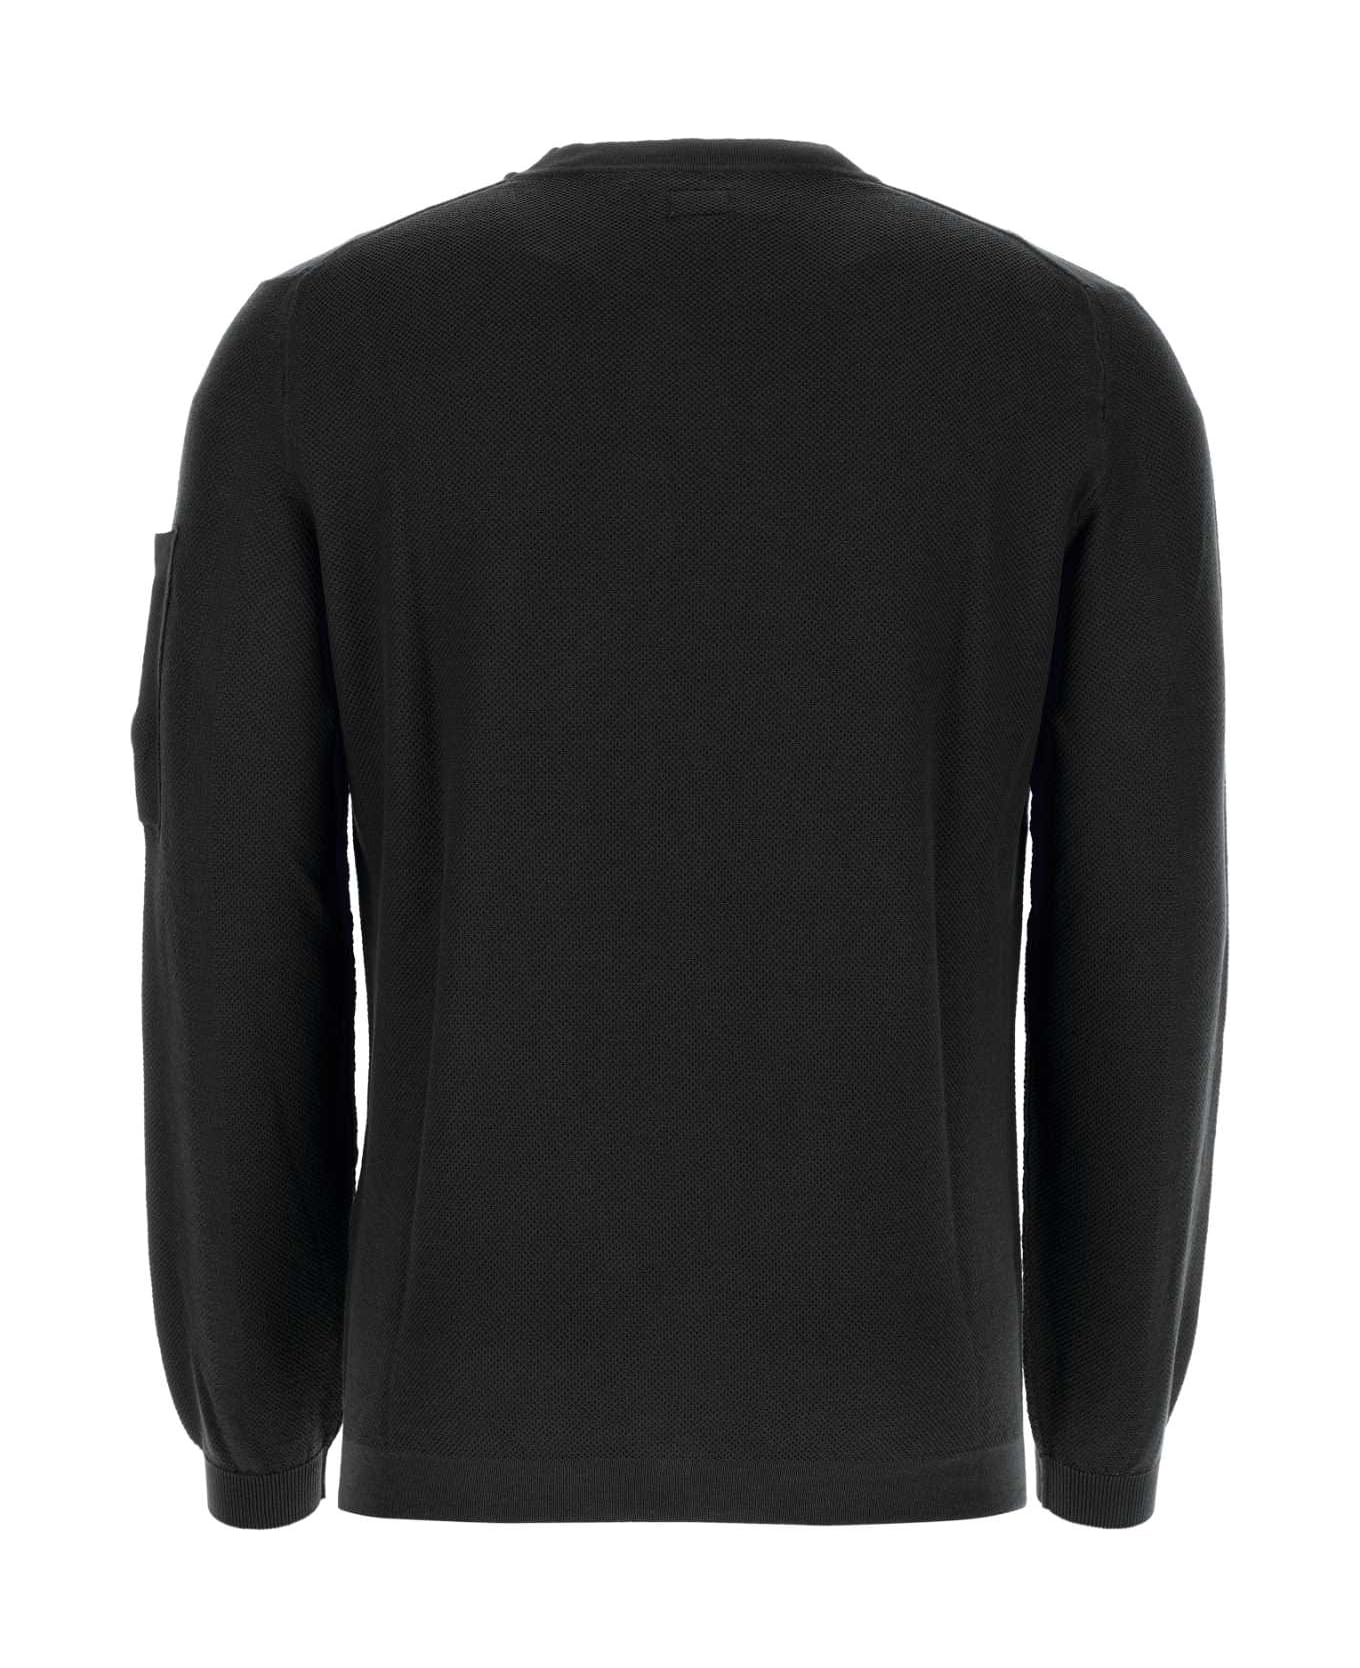 C.P. Company Black Cotton Sweater - Black ニットウェア